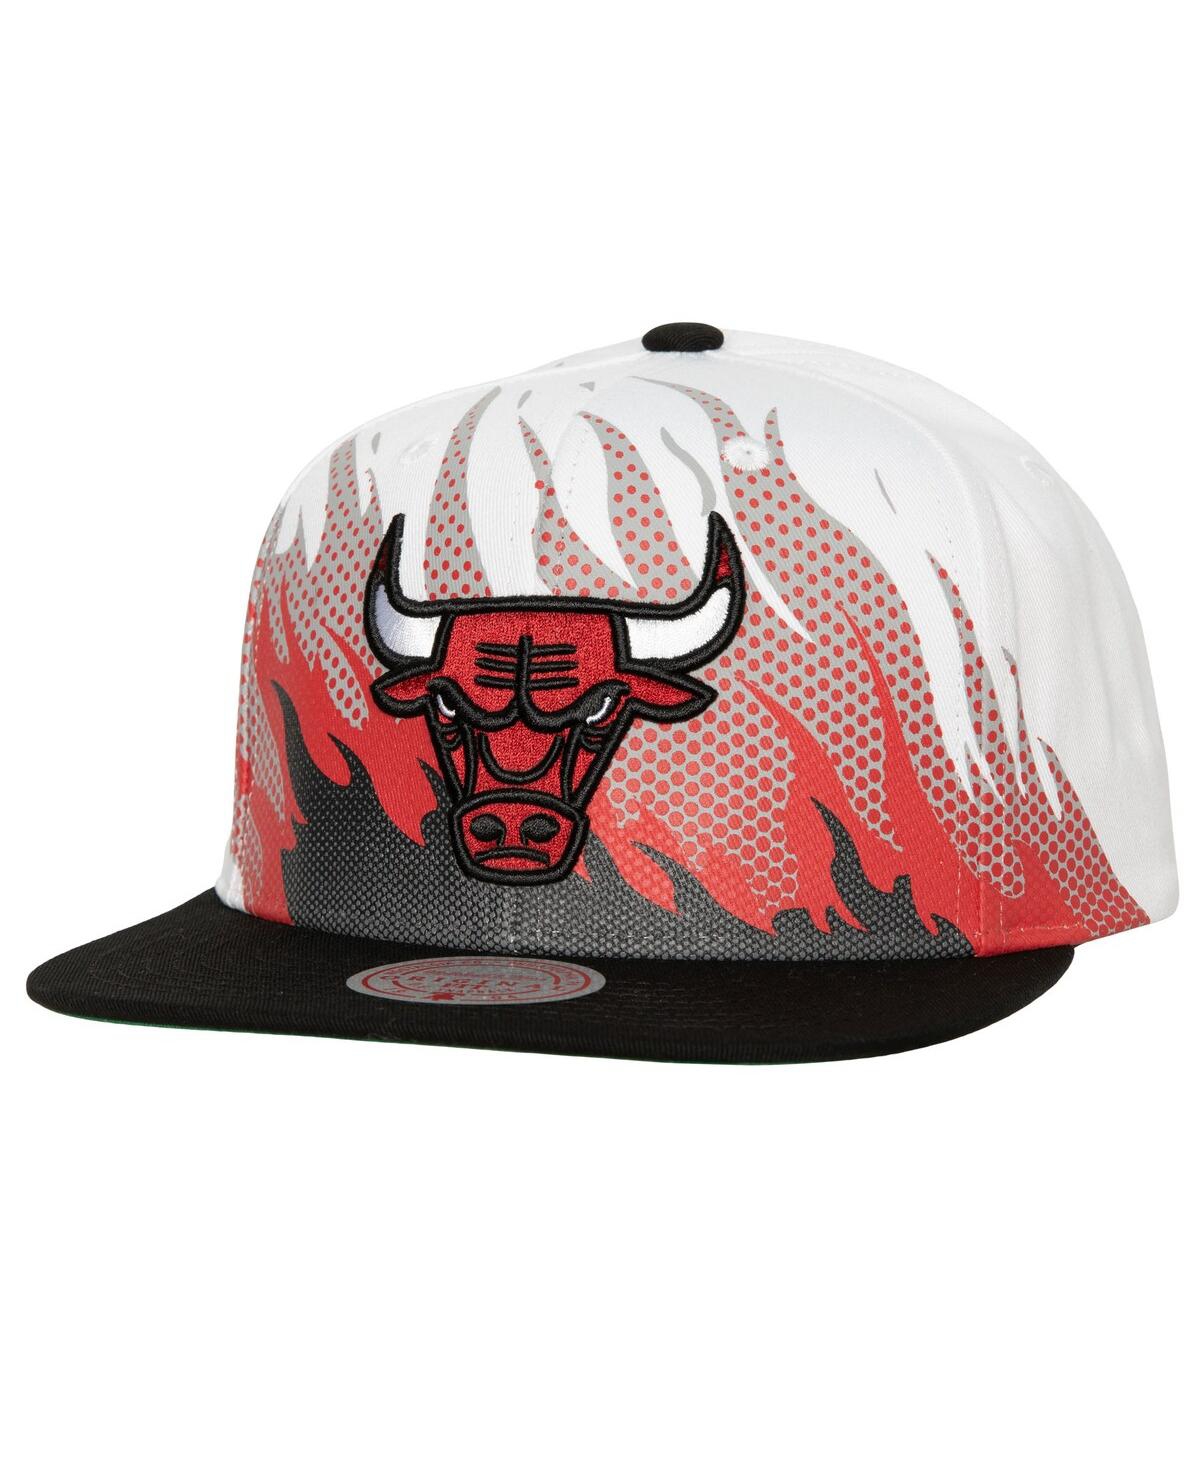 Mitchell & Ness Men's  White Chicago Bulls Hot Fire Snapback Hat